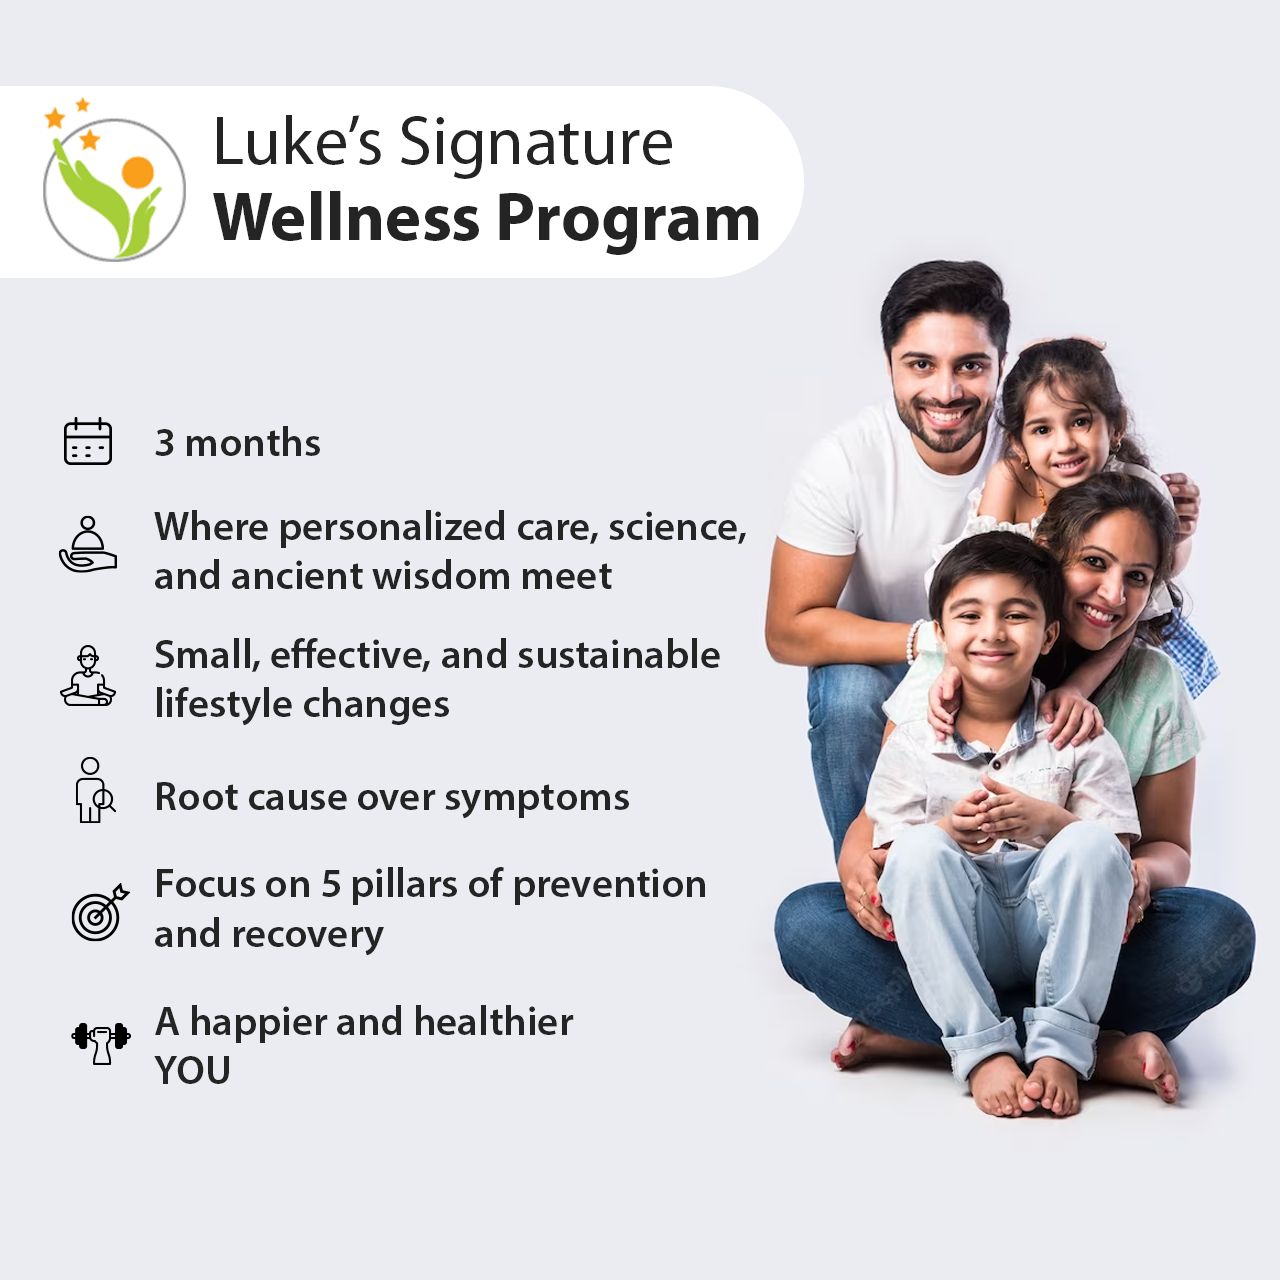 Luke's Signature Wellness Program